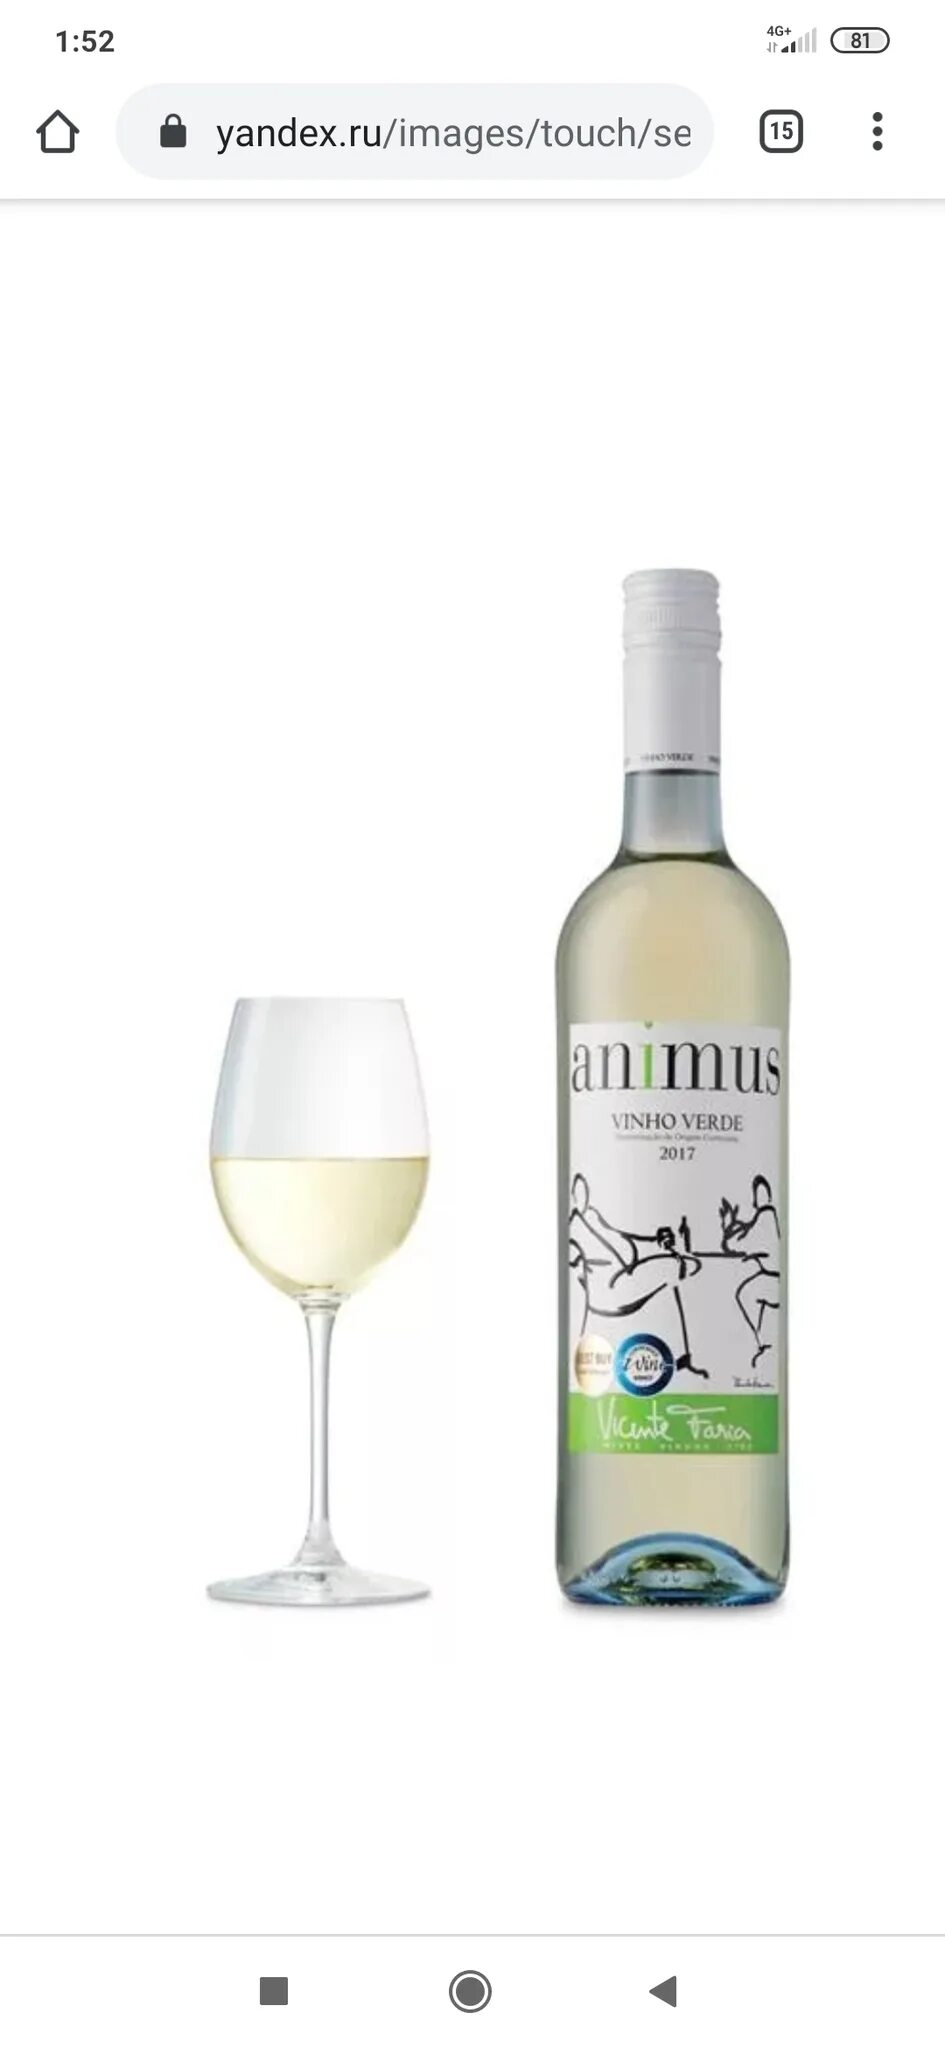 Вино полусухое doc. Вино Виньо Верде белое Португалия. Анимус вино Верде Португалия. Вино Animus Vinho Verde белое полусухое. Вино Анимус Винью Верде.